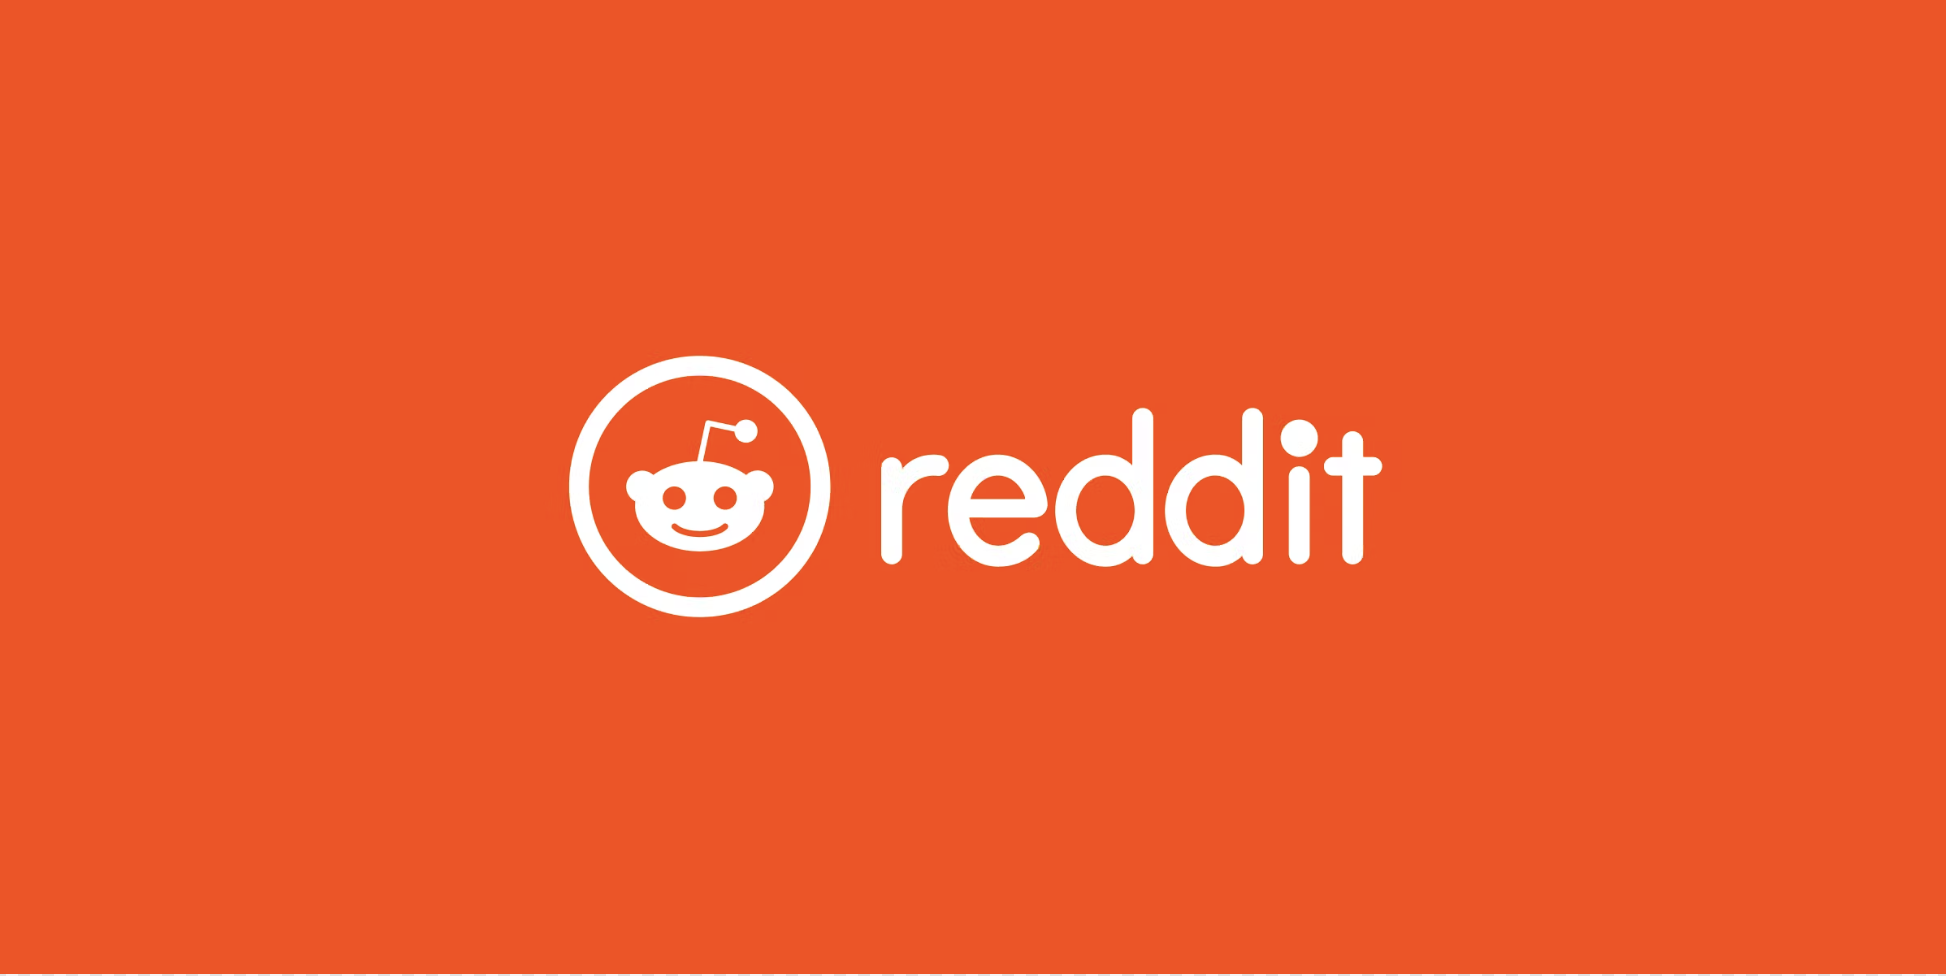 Report Reddit Business Breakdown and Founding Story